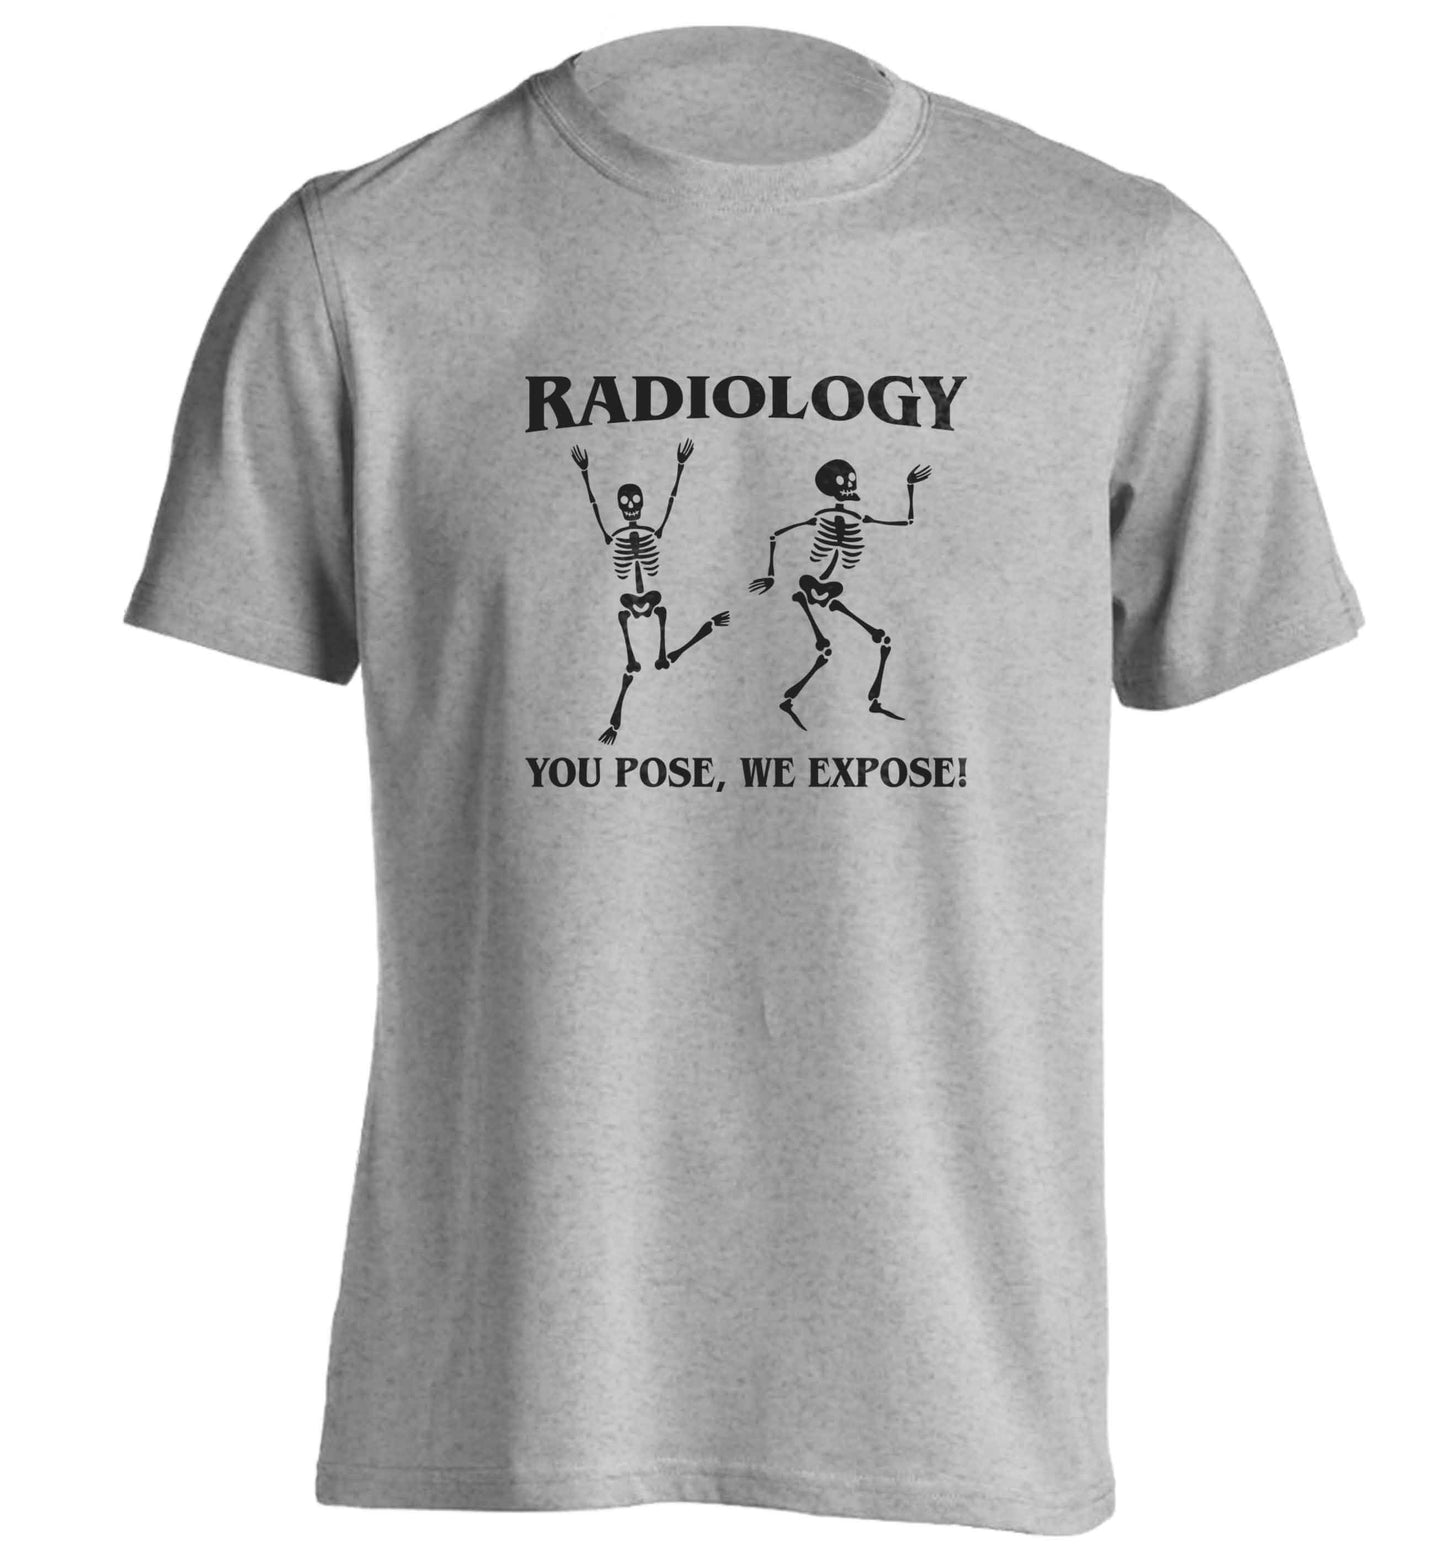 Radiology you pose we expose adults unisex grey Tshirt 2XL